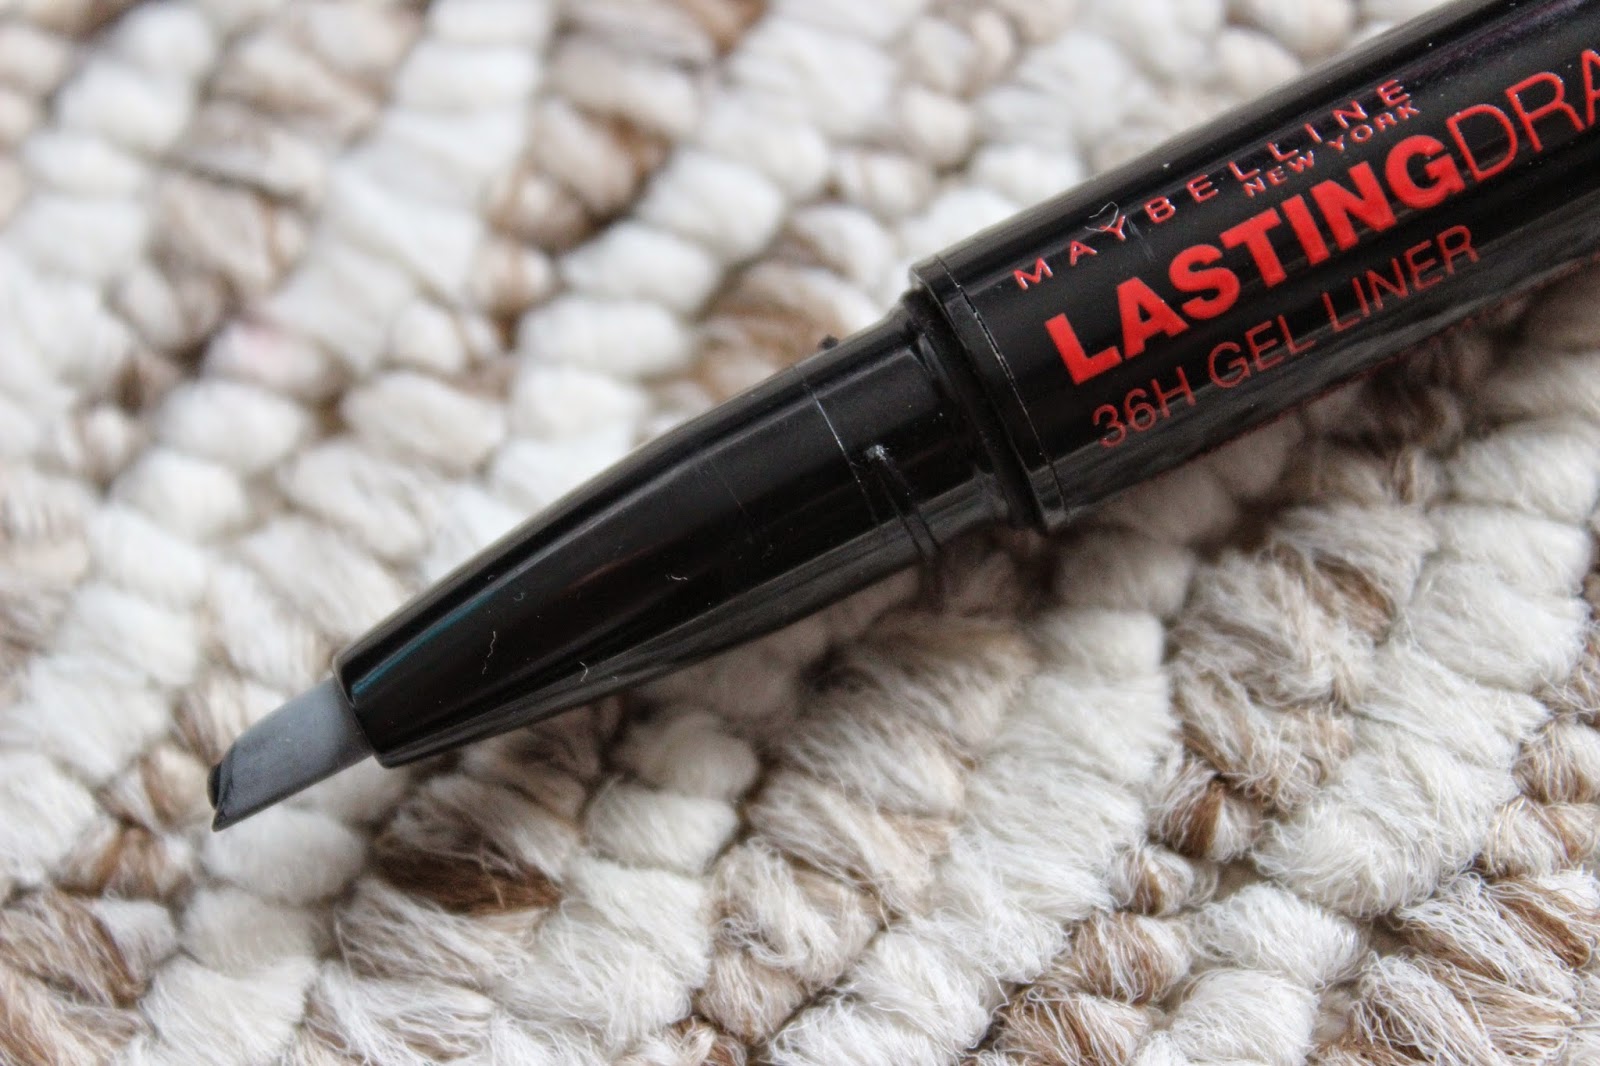 Maybelline Lasting Drama Gel Eyeliner Pen Black // Review